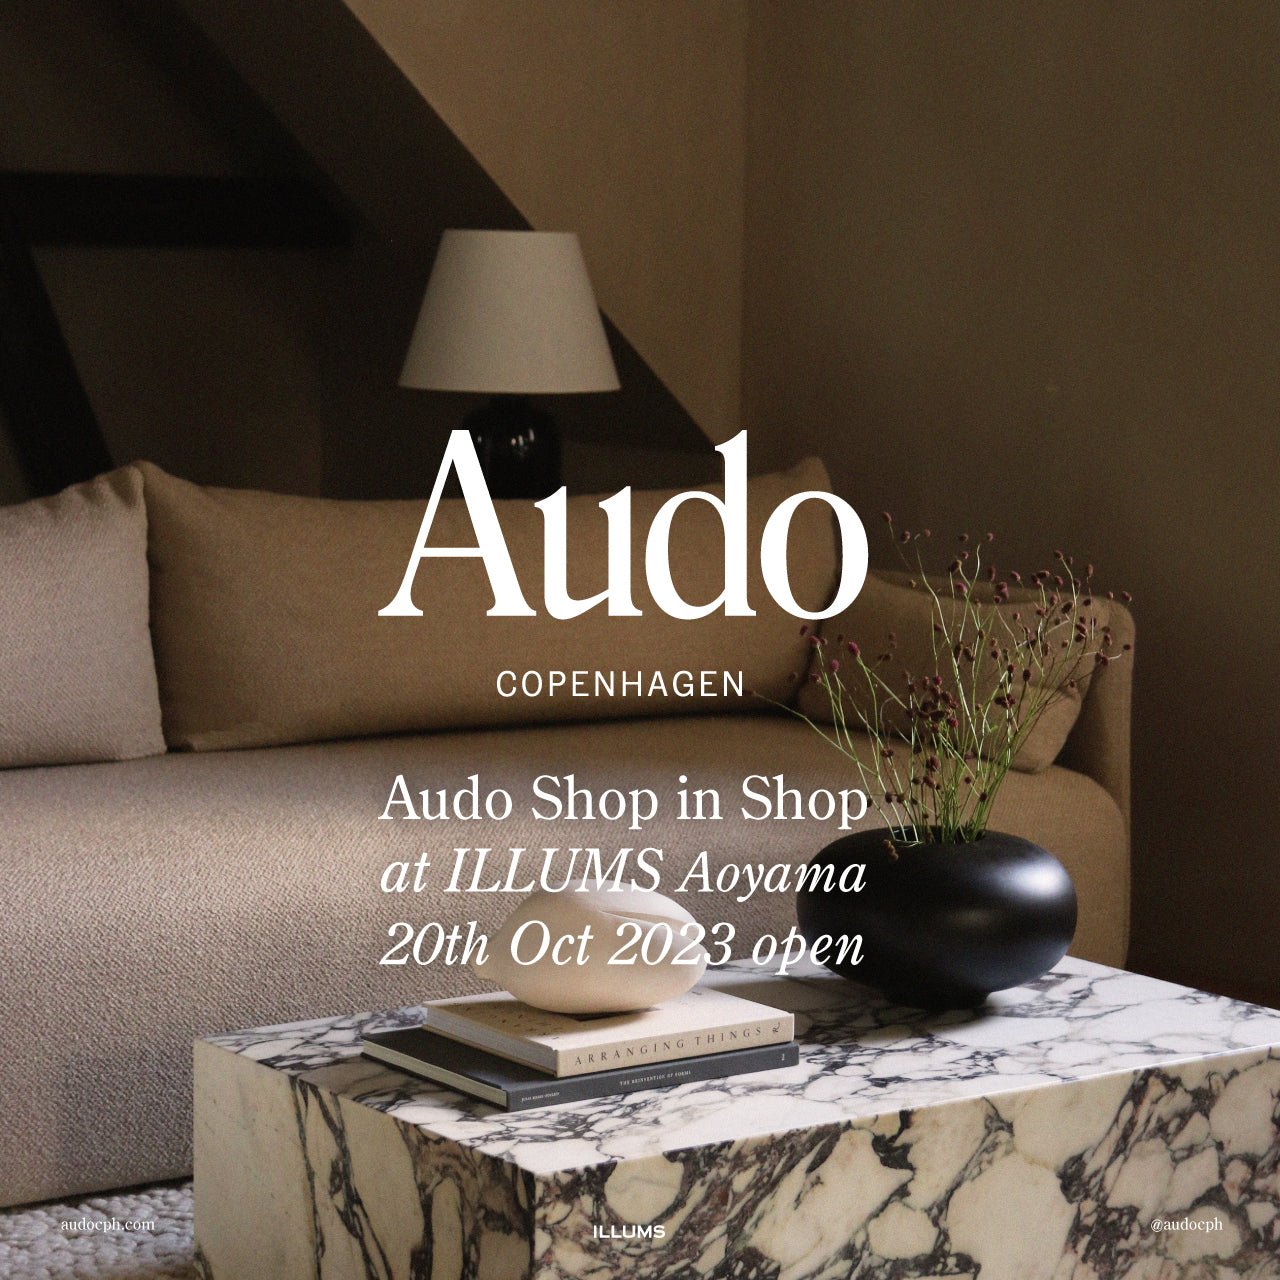 「Audo Copenhagen」の日本初ショップインショップがILLUMS青山店内にオープン - イルムス オンラインストア